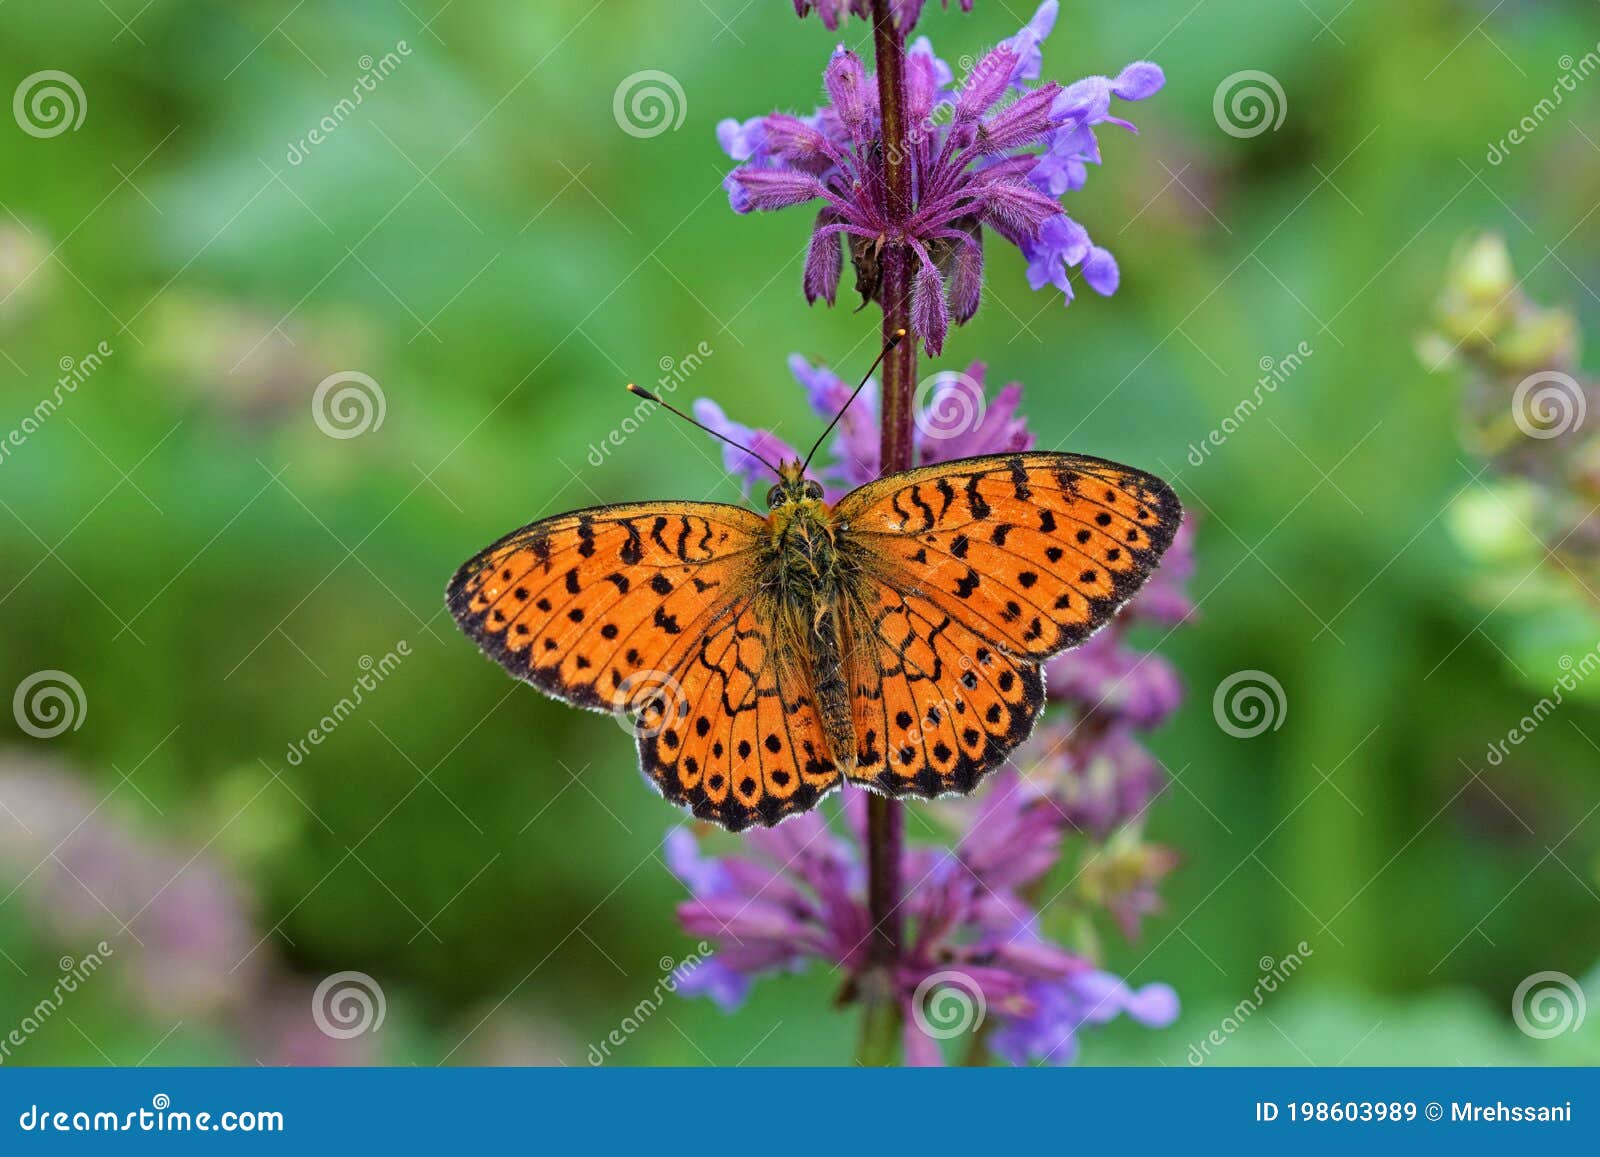 brenthis hecate , the twin-spot fritillary butterfly , butterflies of iran